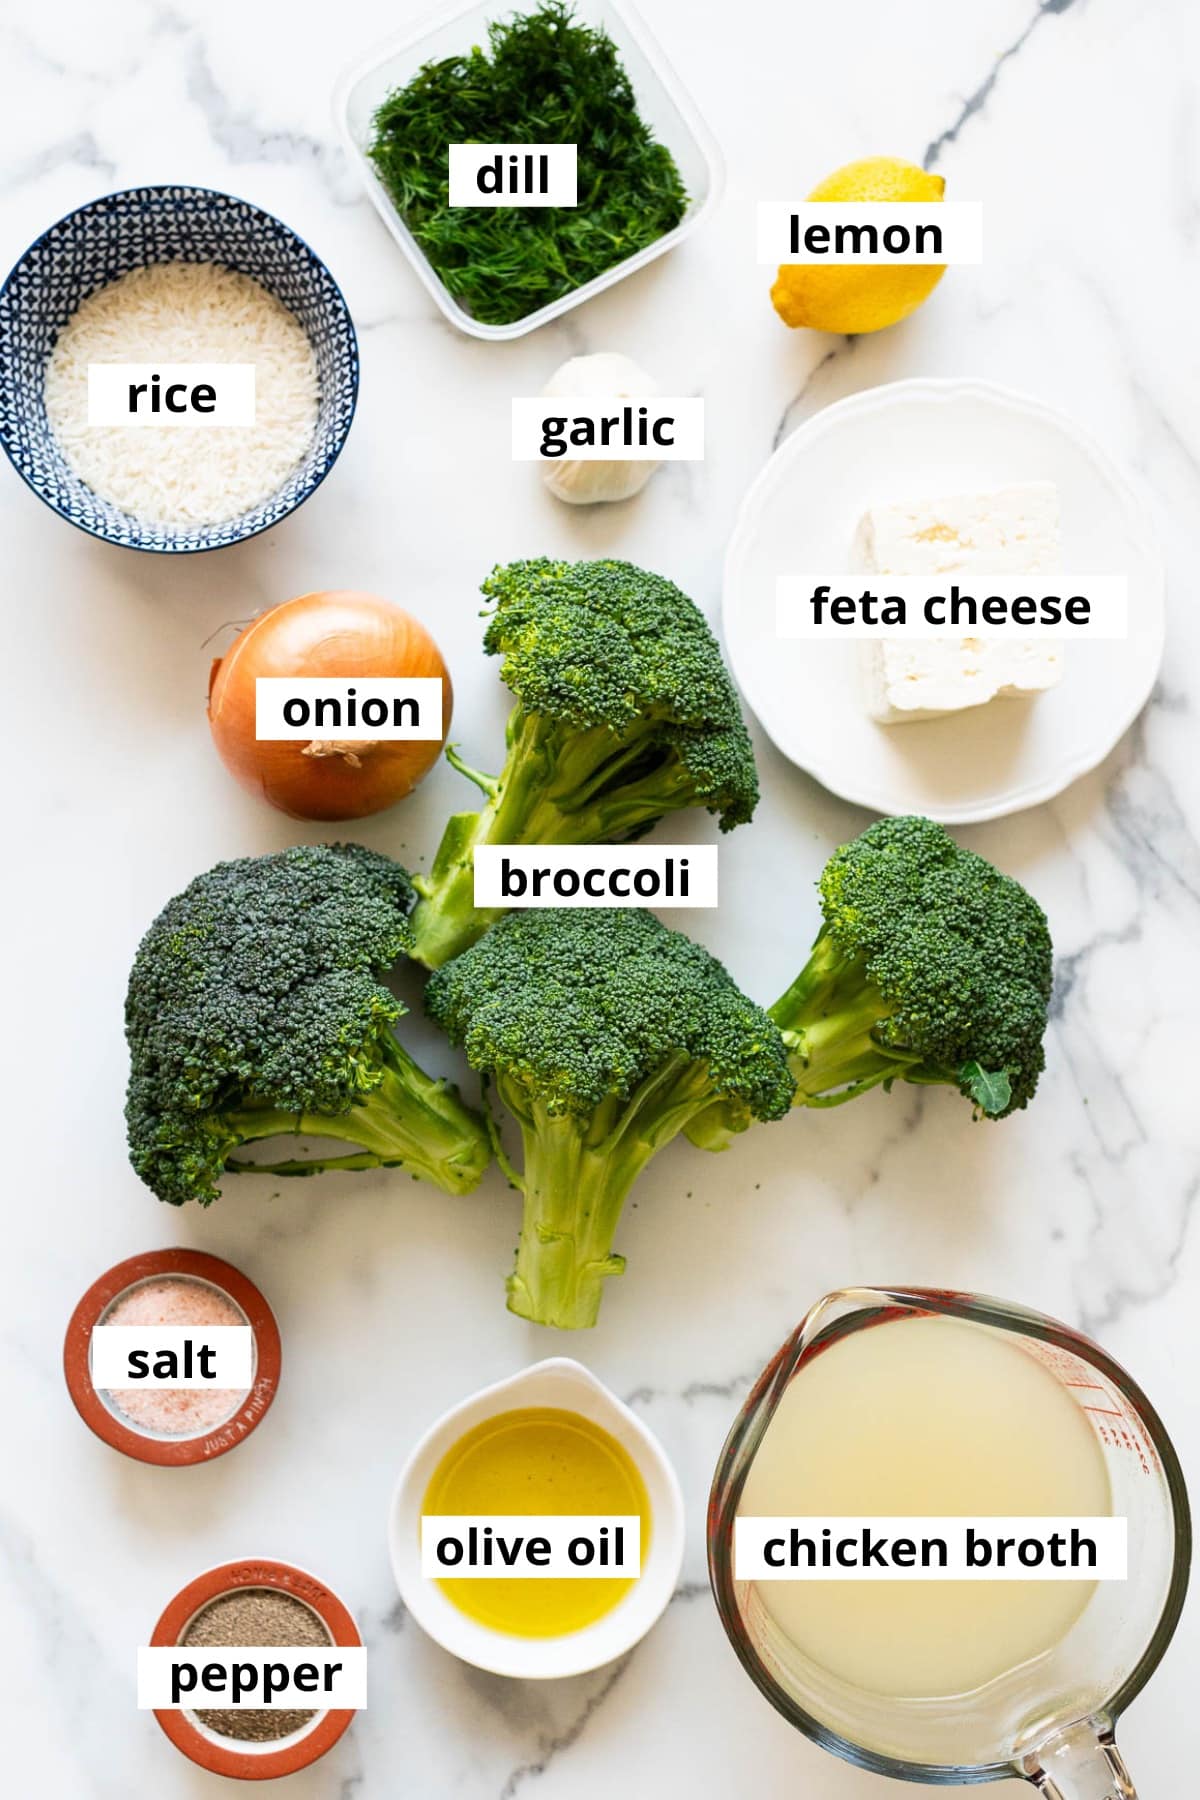 Broccoli, onion, rice, dill, lemon, garlic, feta cheese, chicken broth, olive oil, salt and pepper.